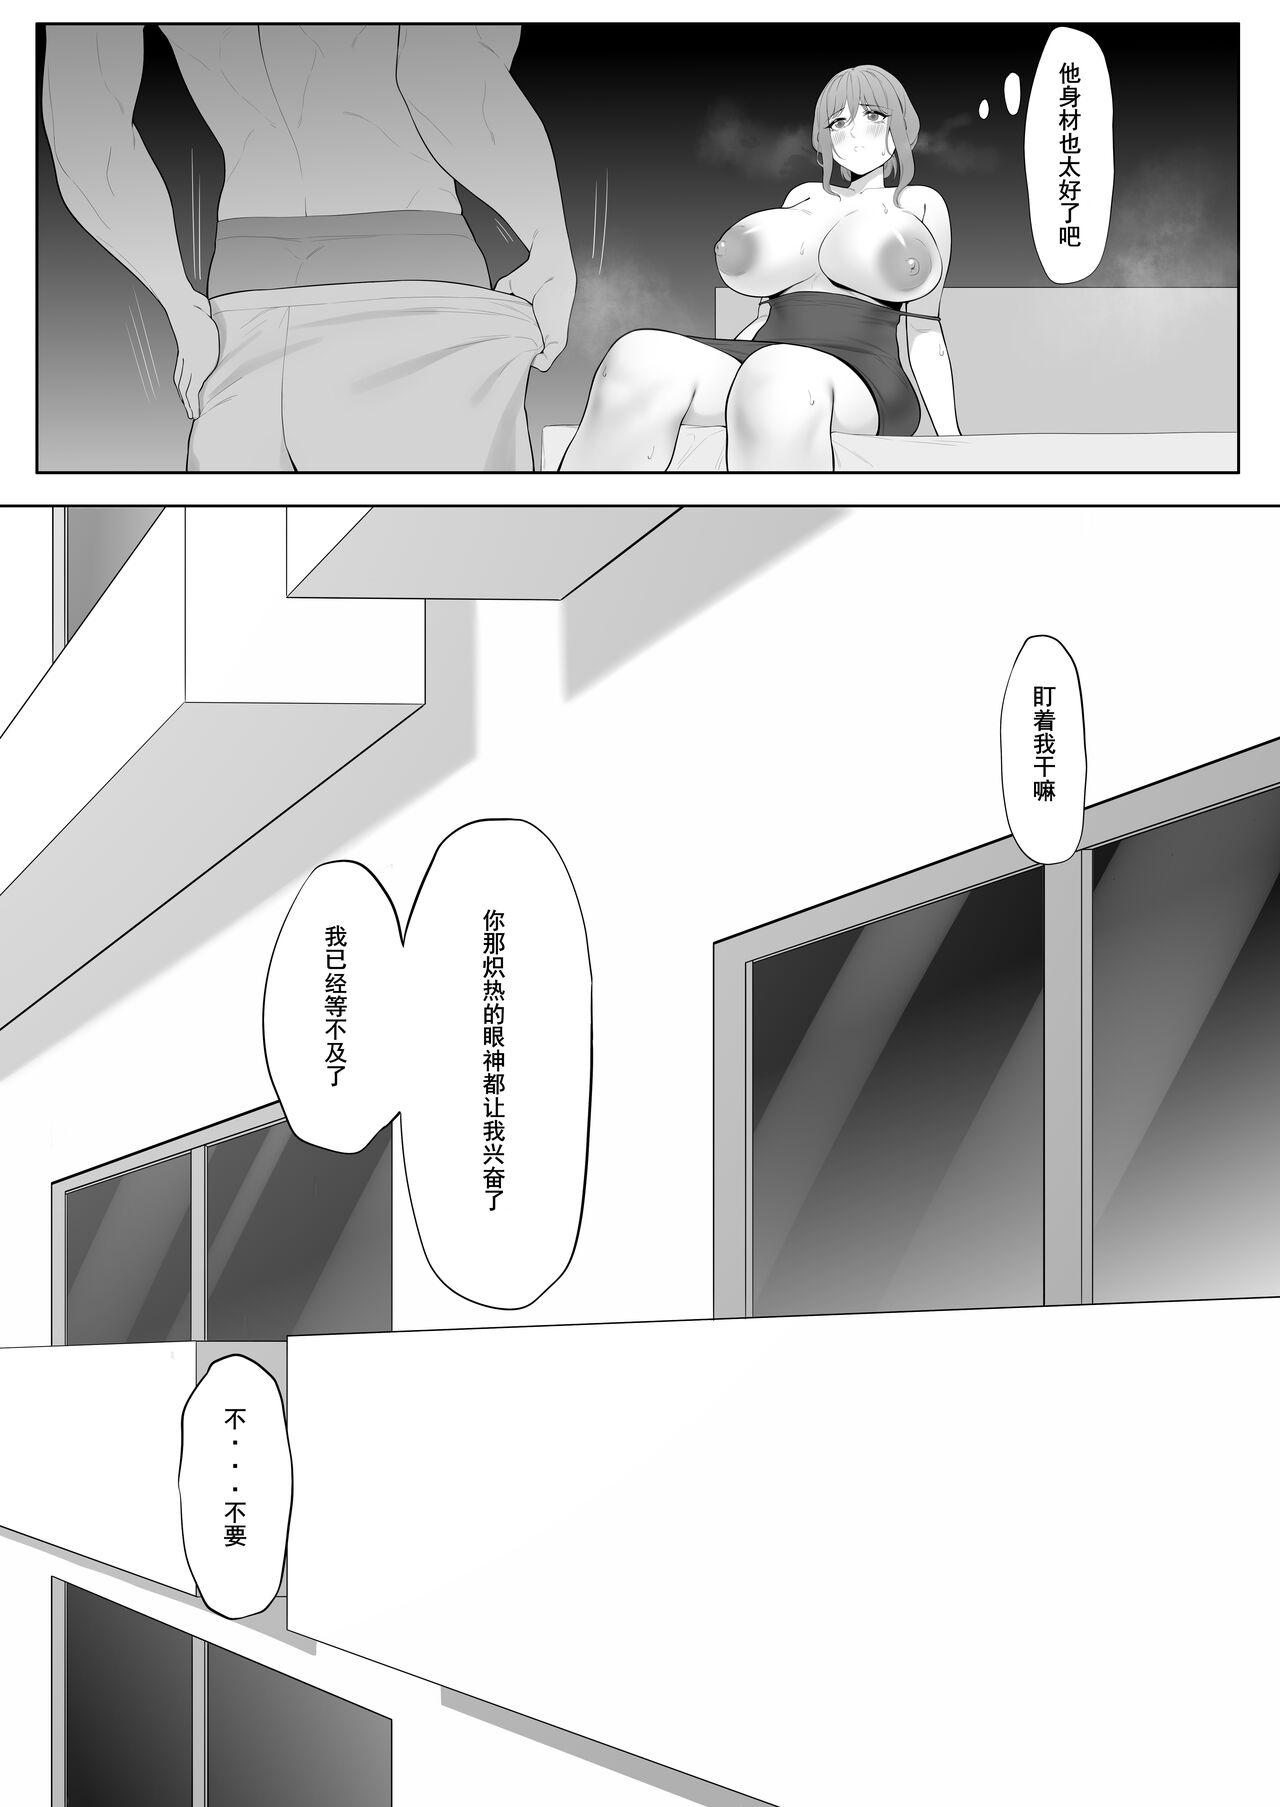 Chat 邻居 - Original Art - Page 3